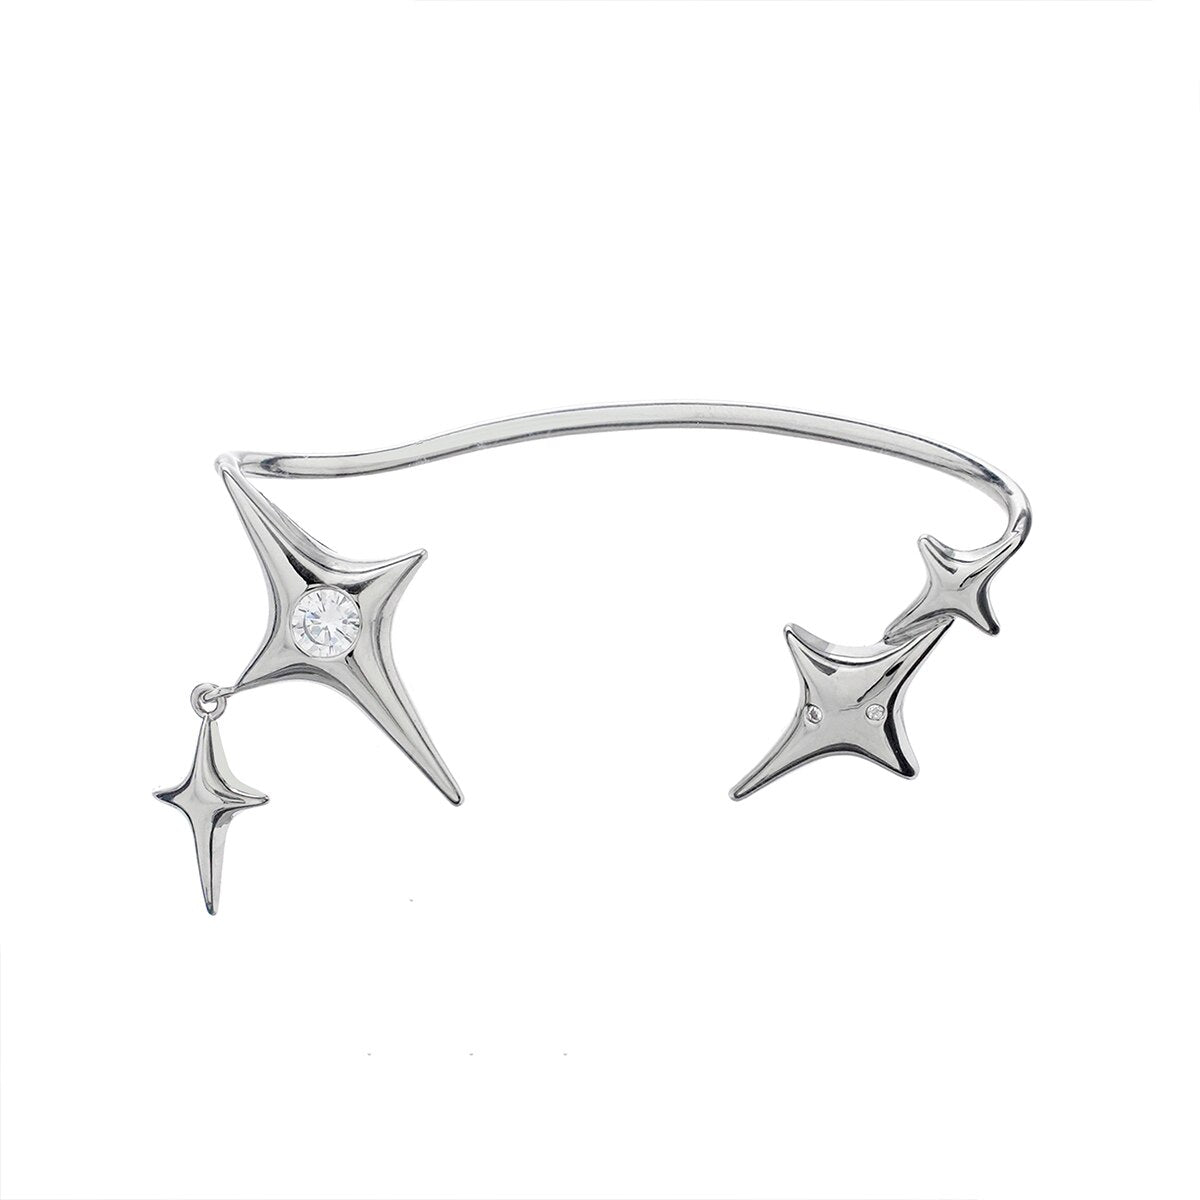 Astral Sparkle Star No Piercing Ear Cuffs